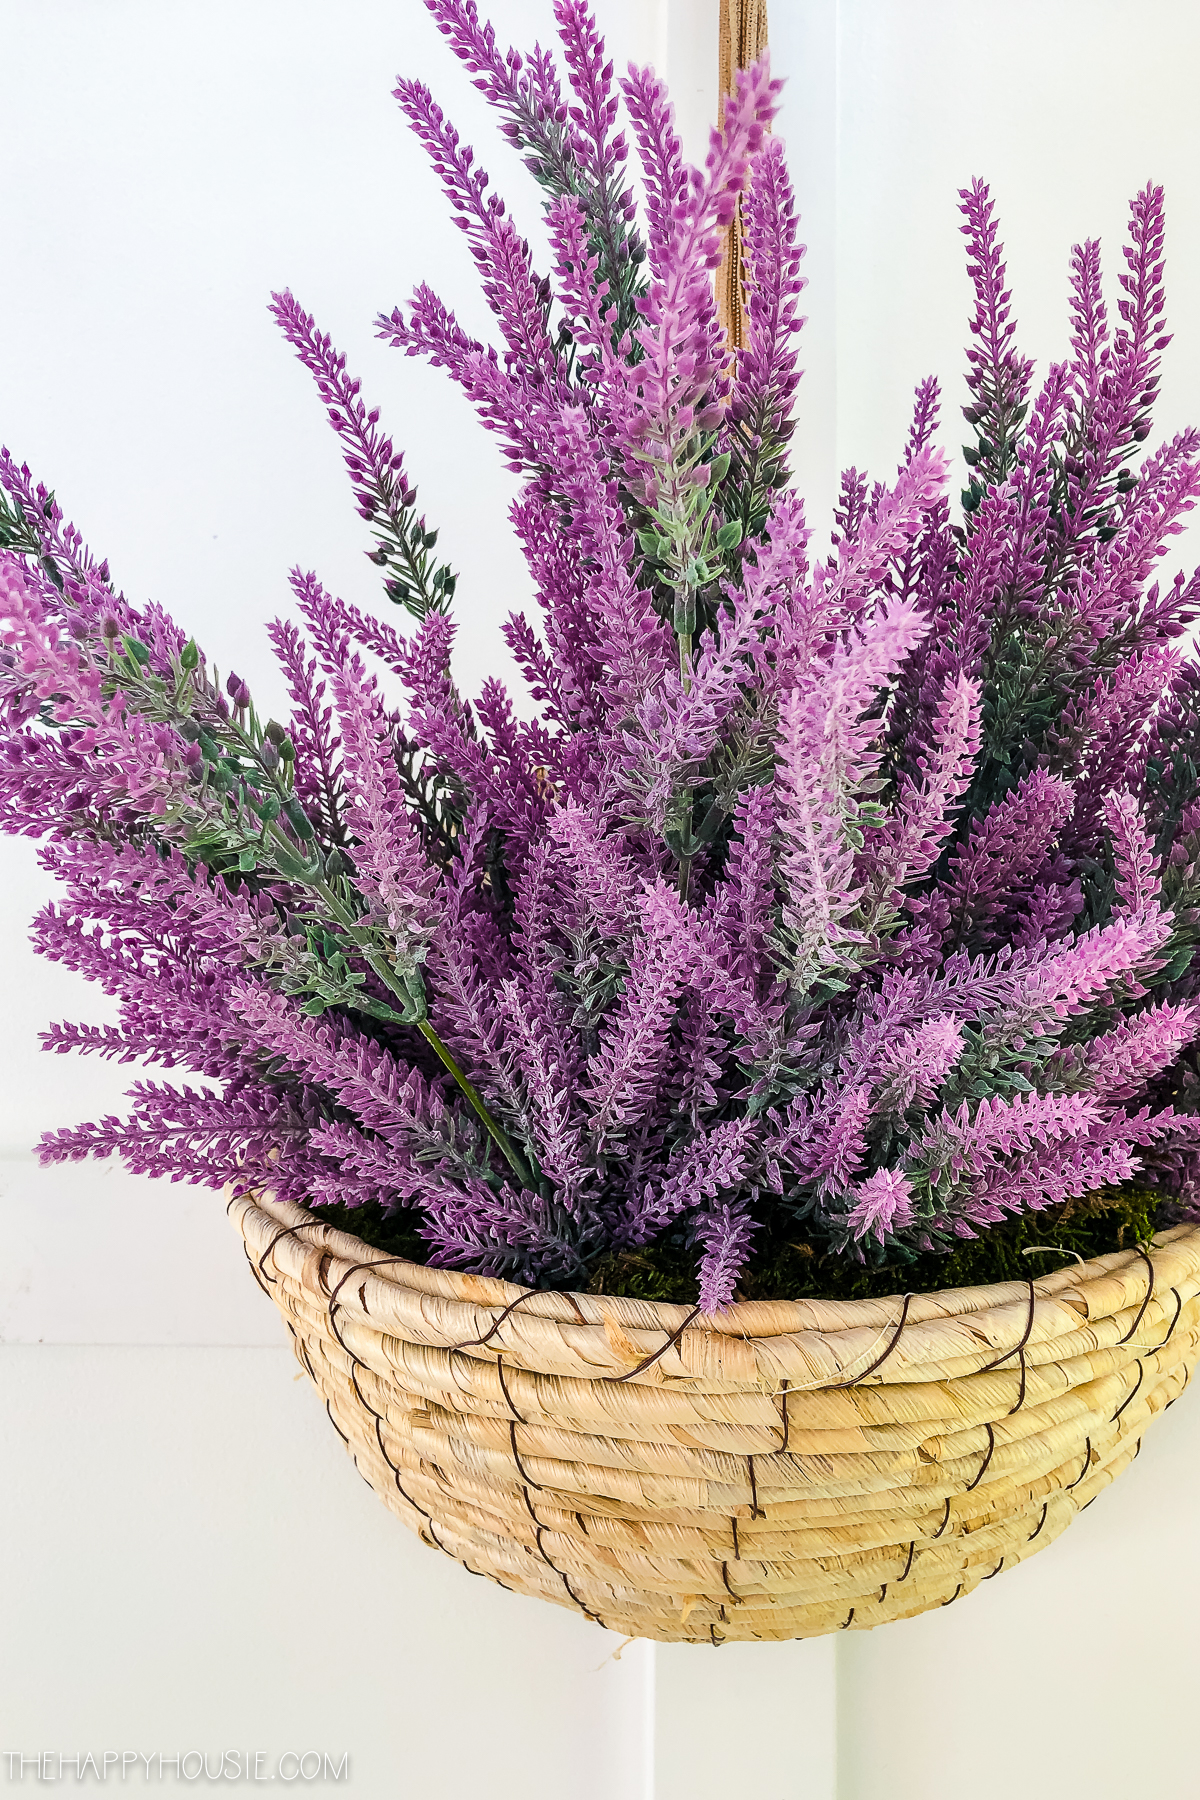 A basket filled with lavender.